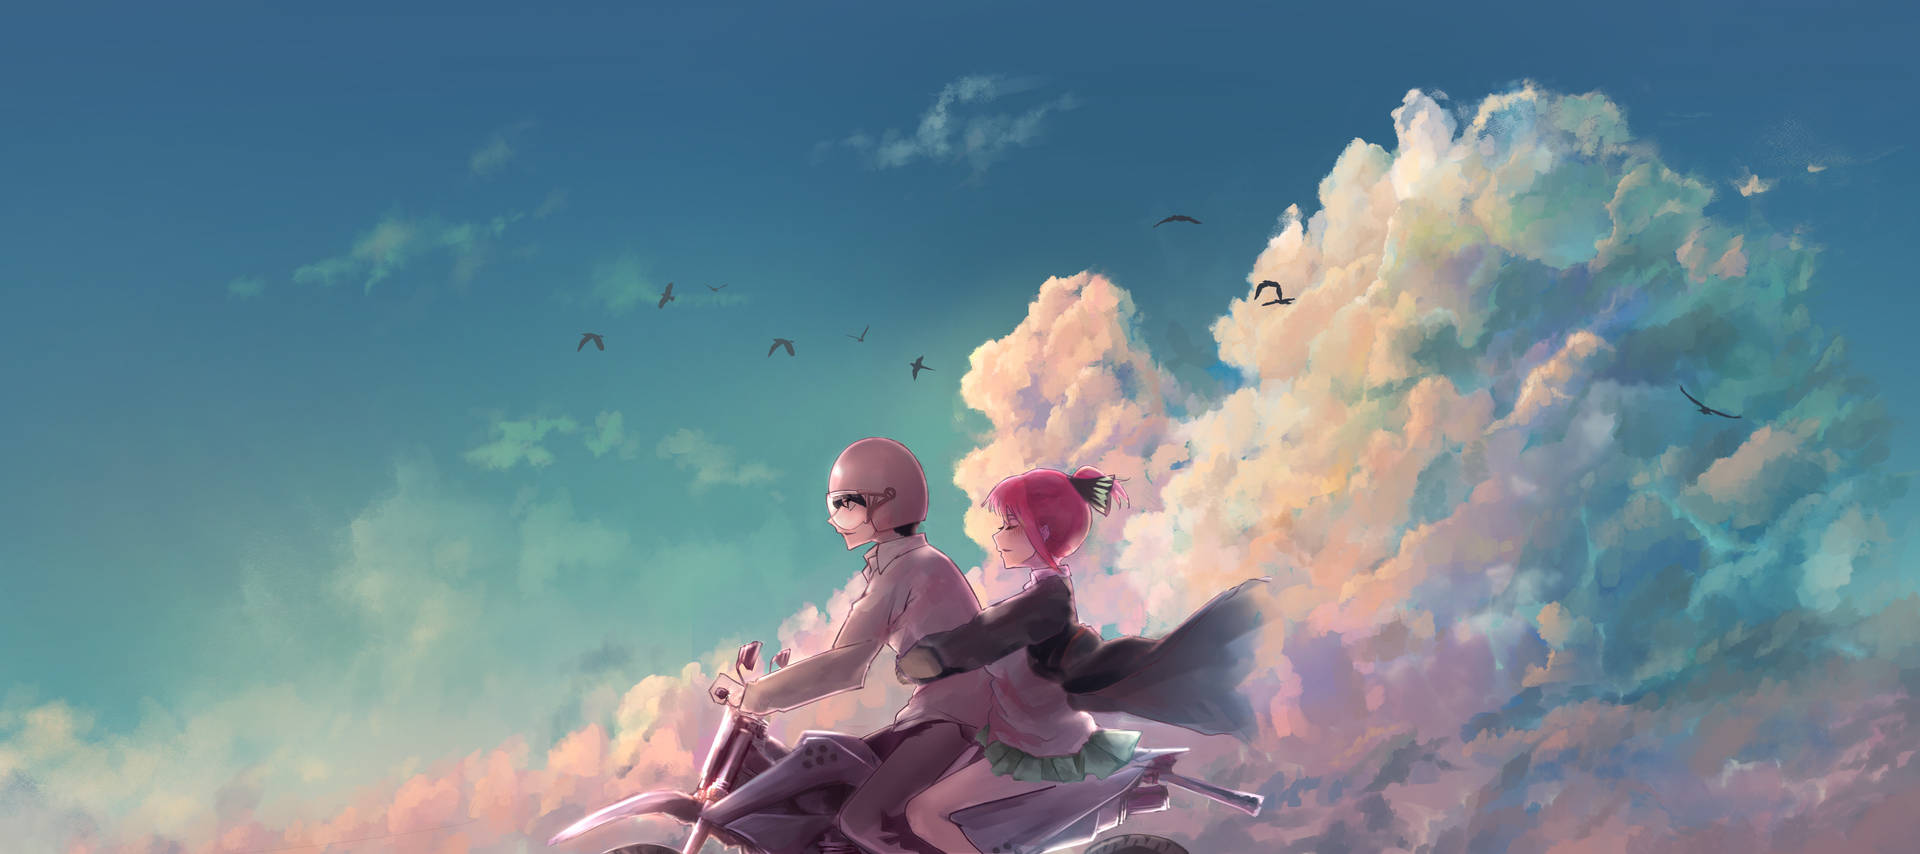 Aesthetic Anime Desktop Boy And Girl On Flying Bike Background